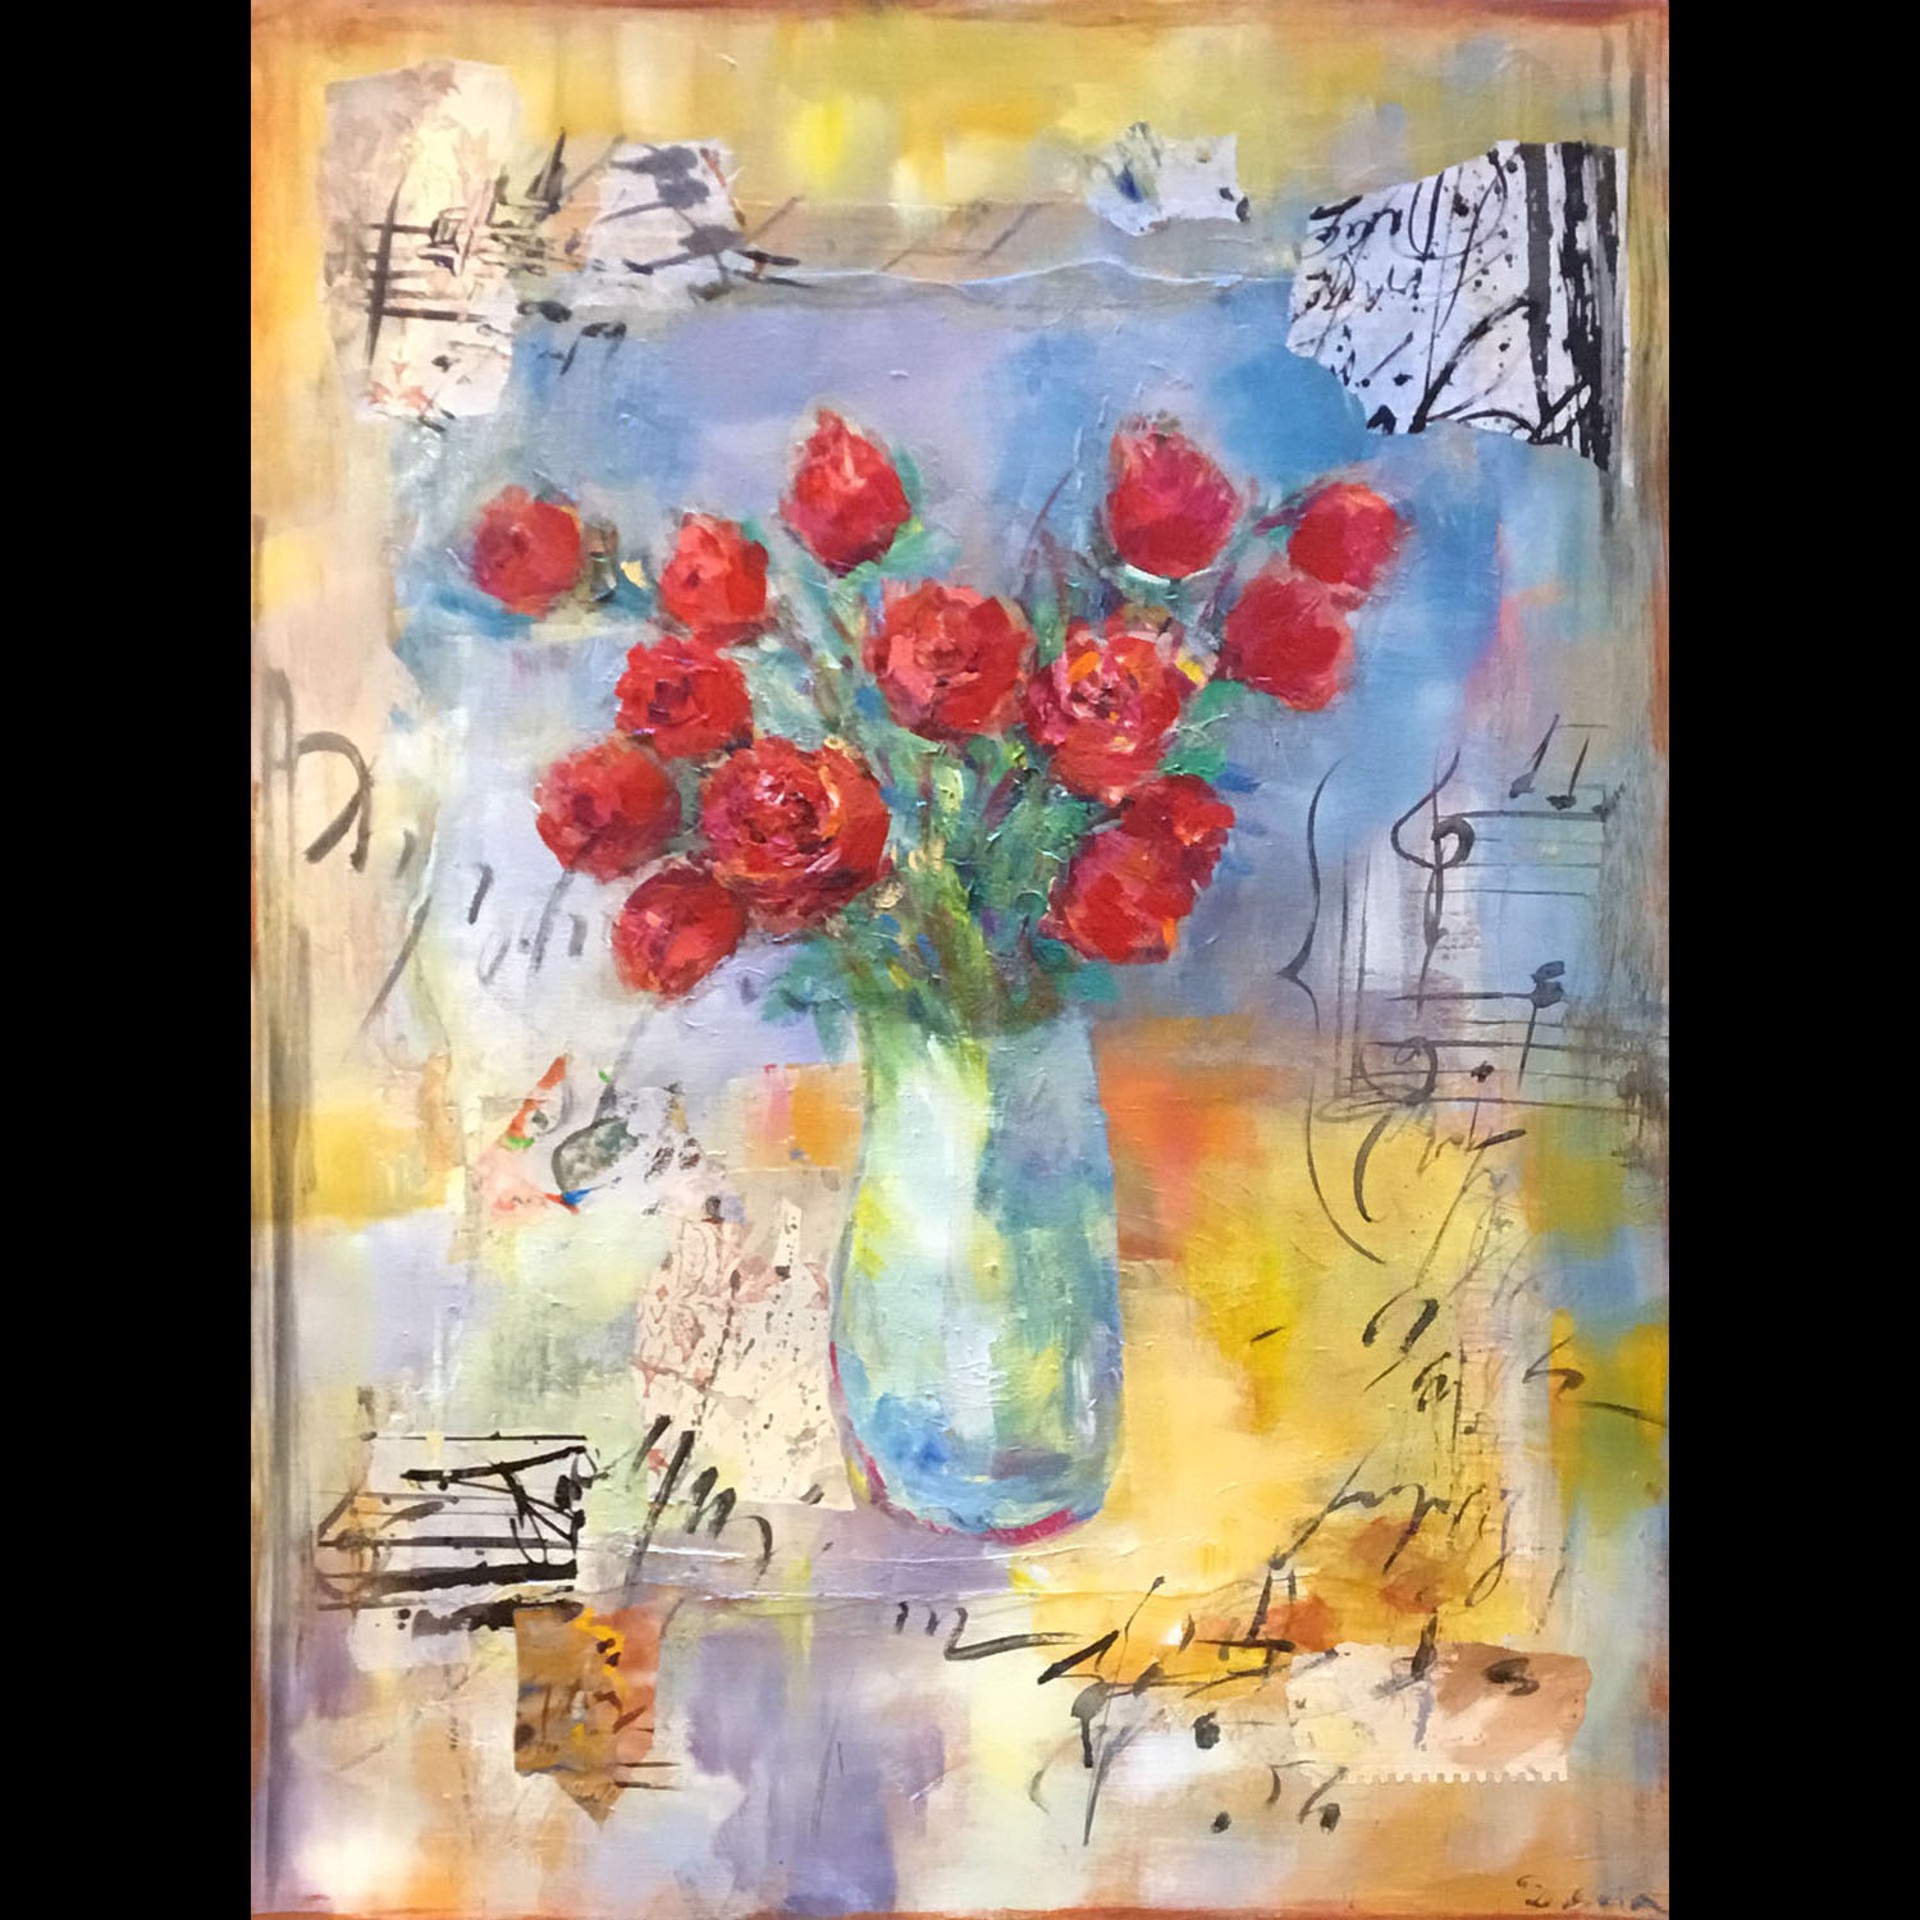 Musical Bouquet (Adoring Roses) by Dominique Caron